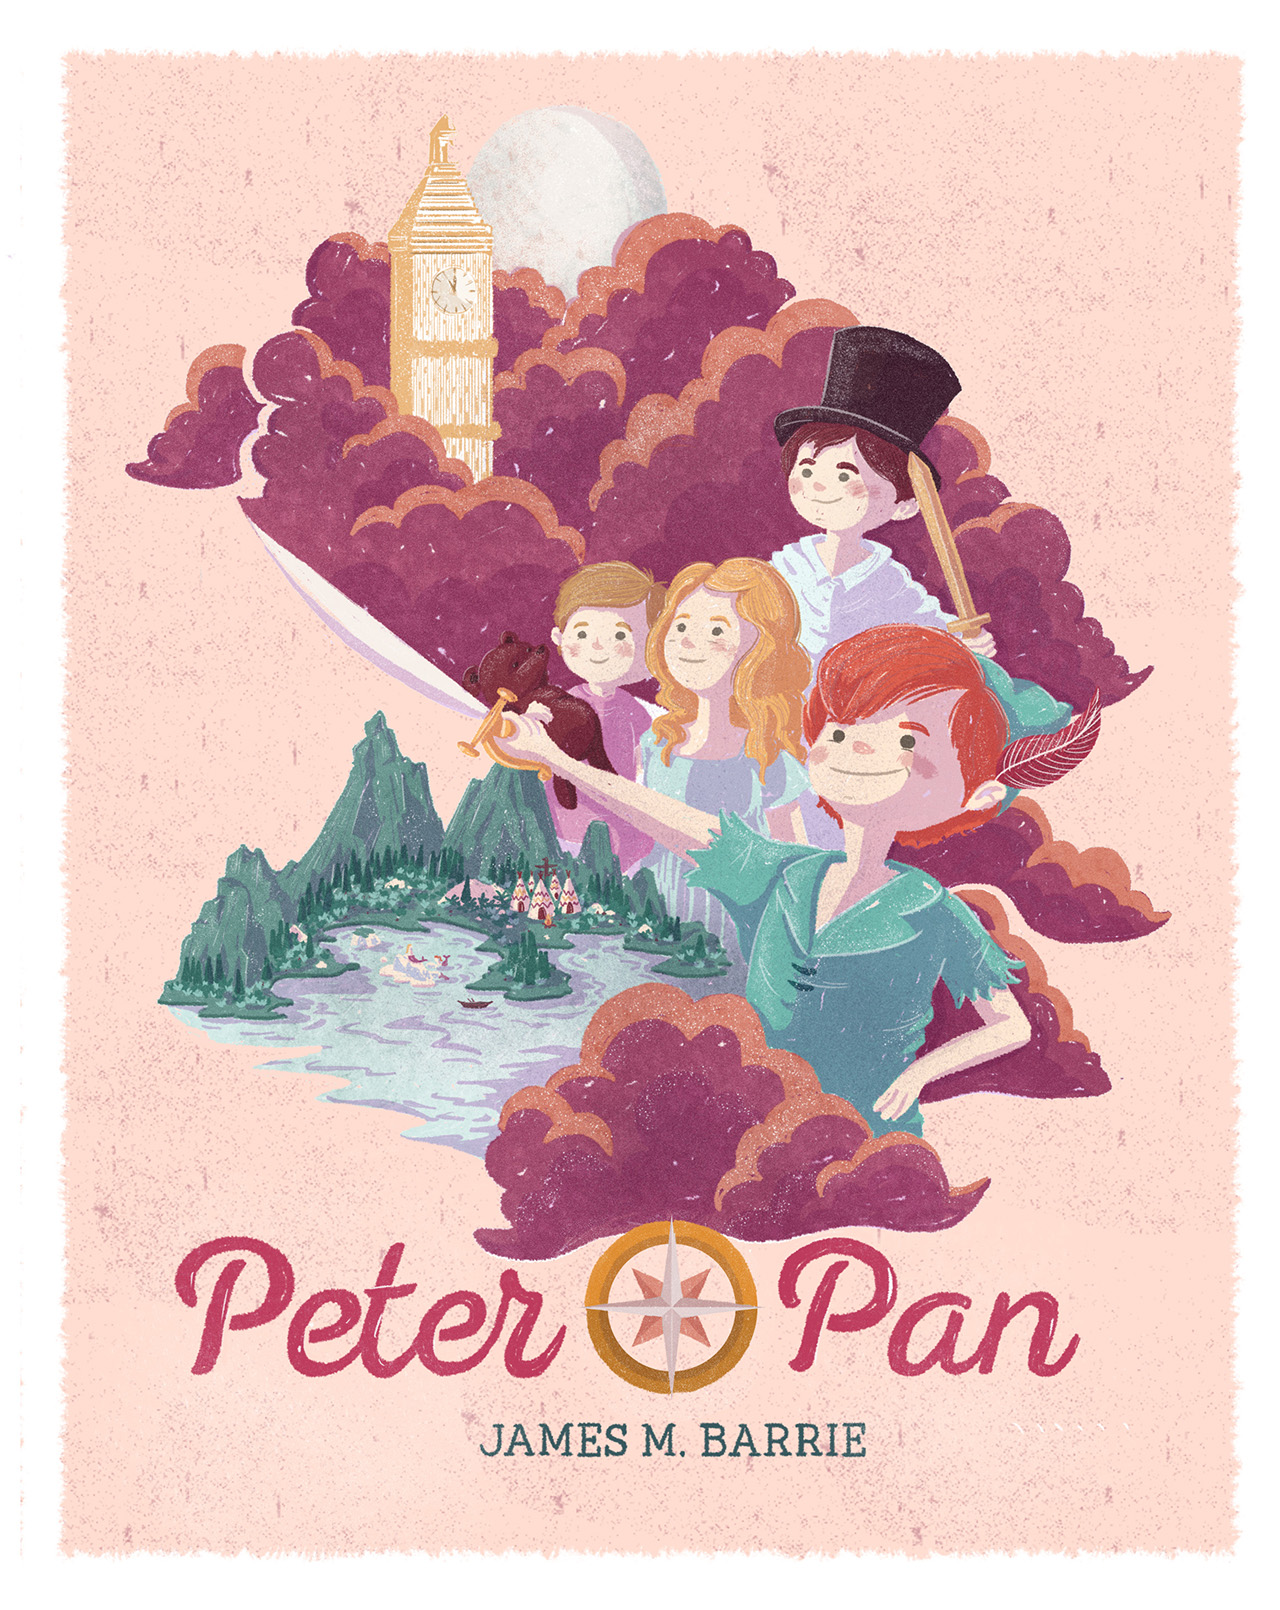 Maria Suarez | "Peter Pan" by James M. Barrie